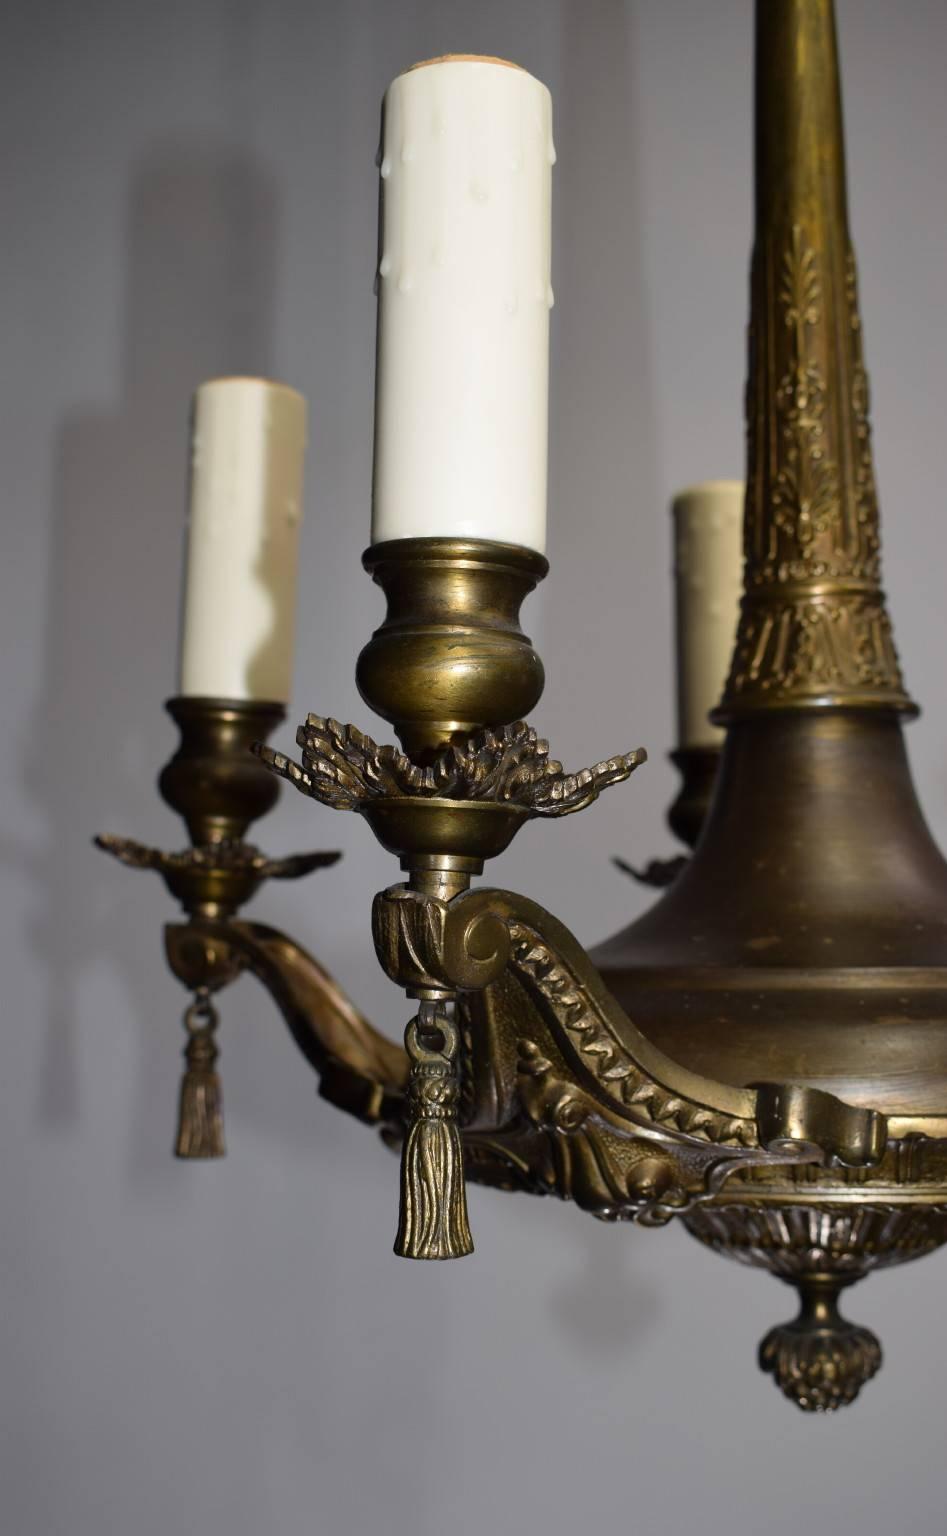 Gilt bronze chandelier with great detail, five lights.